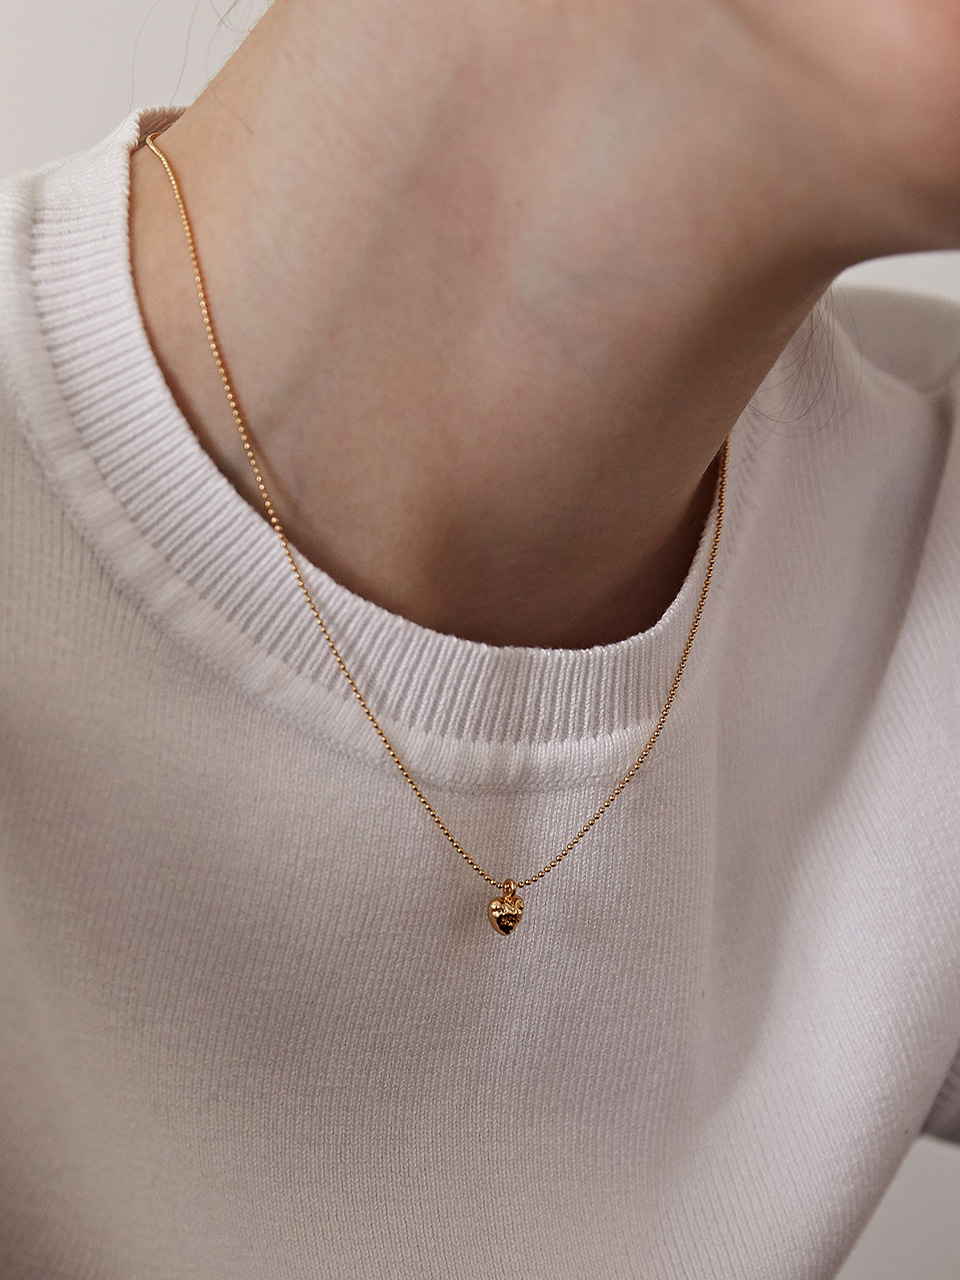 Bumpy petit necklace - gold